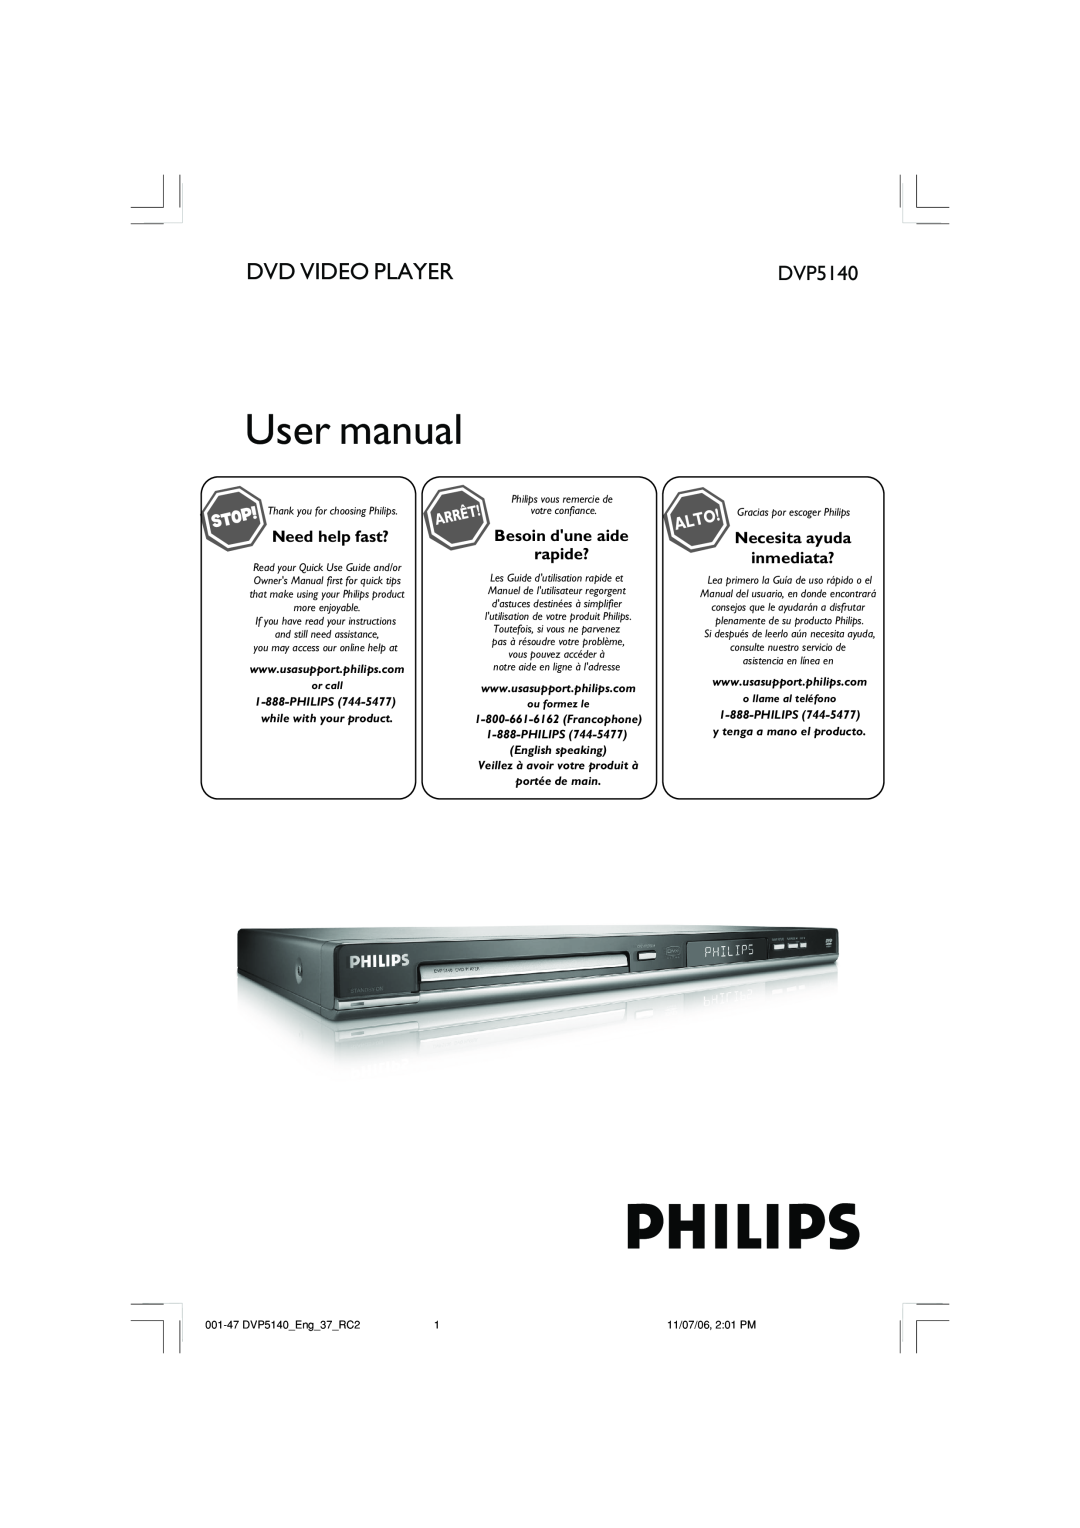 Philips DVP5140 user manual Dvd Video Player, Need help fast?, Besoin dune aide rapide?, Necesita ayuda inmediata? 